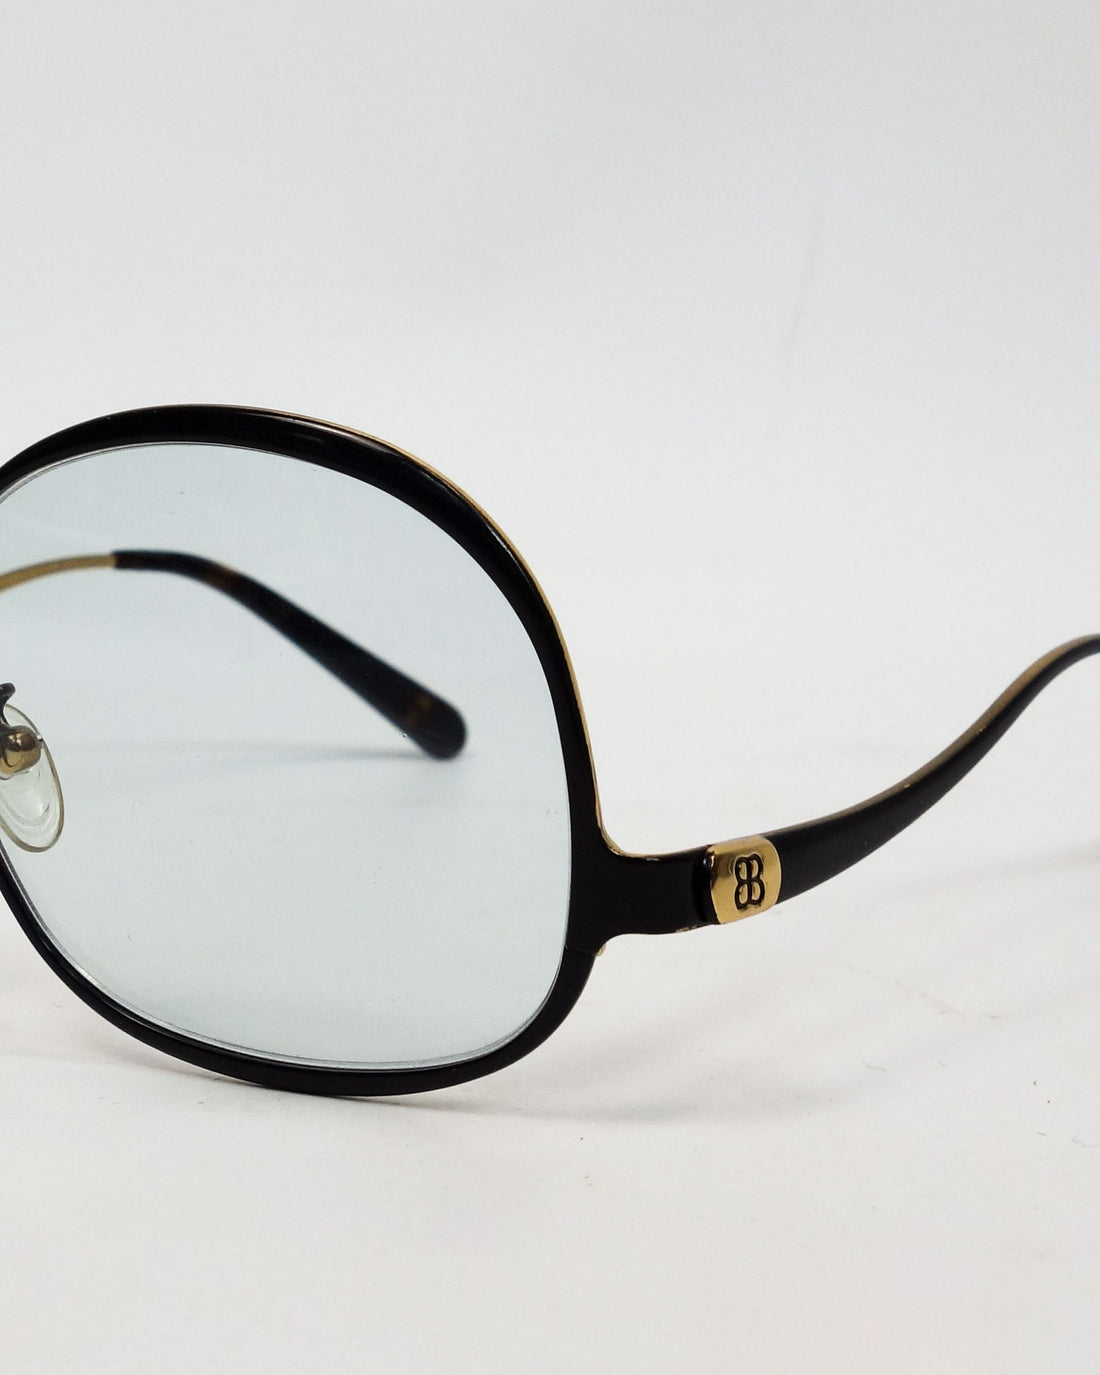 Balenciaga Black Oval Sunglasses 2000's